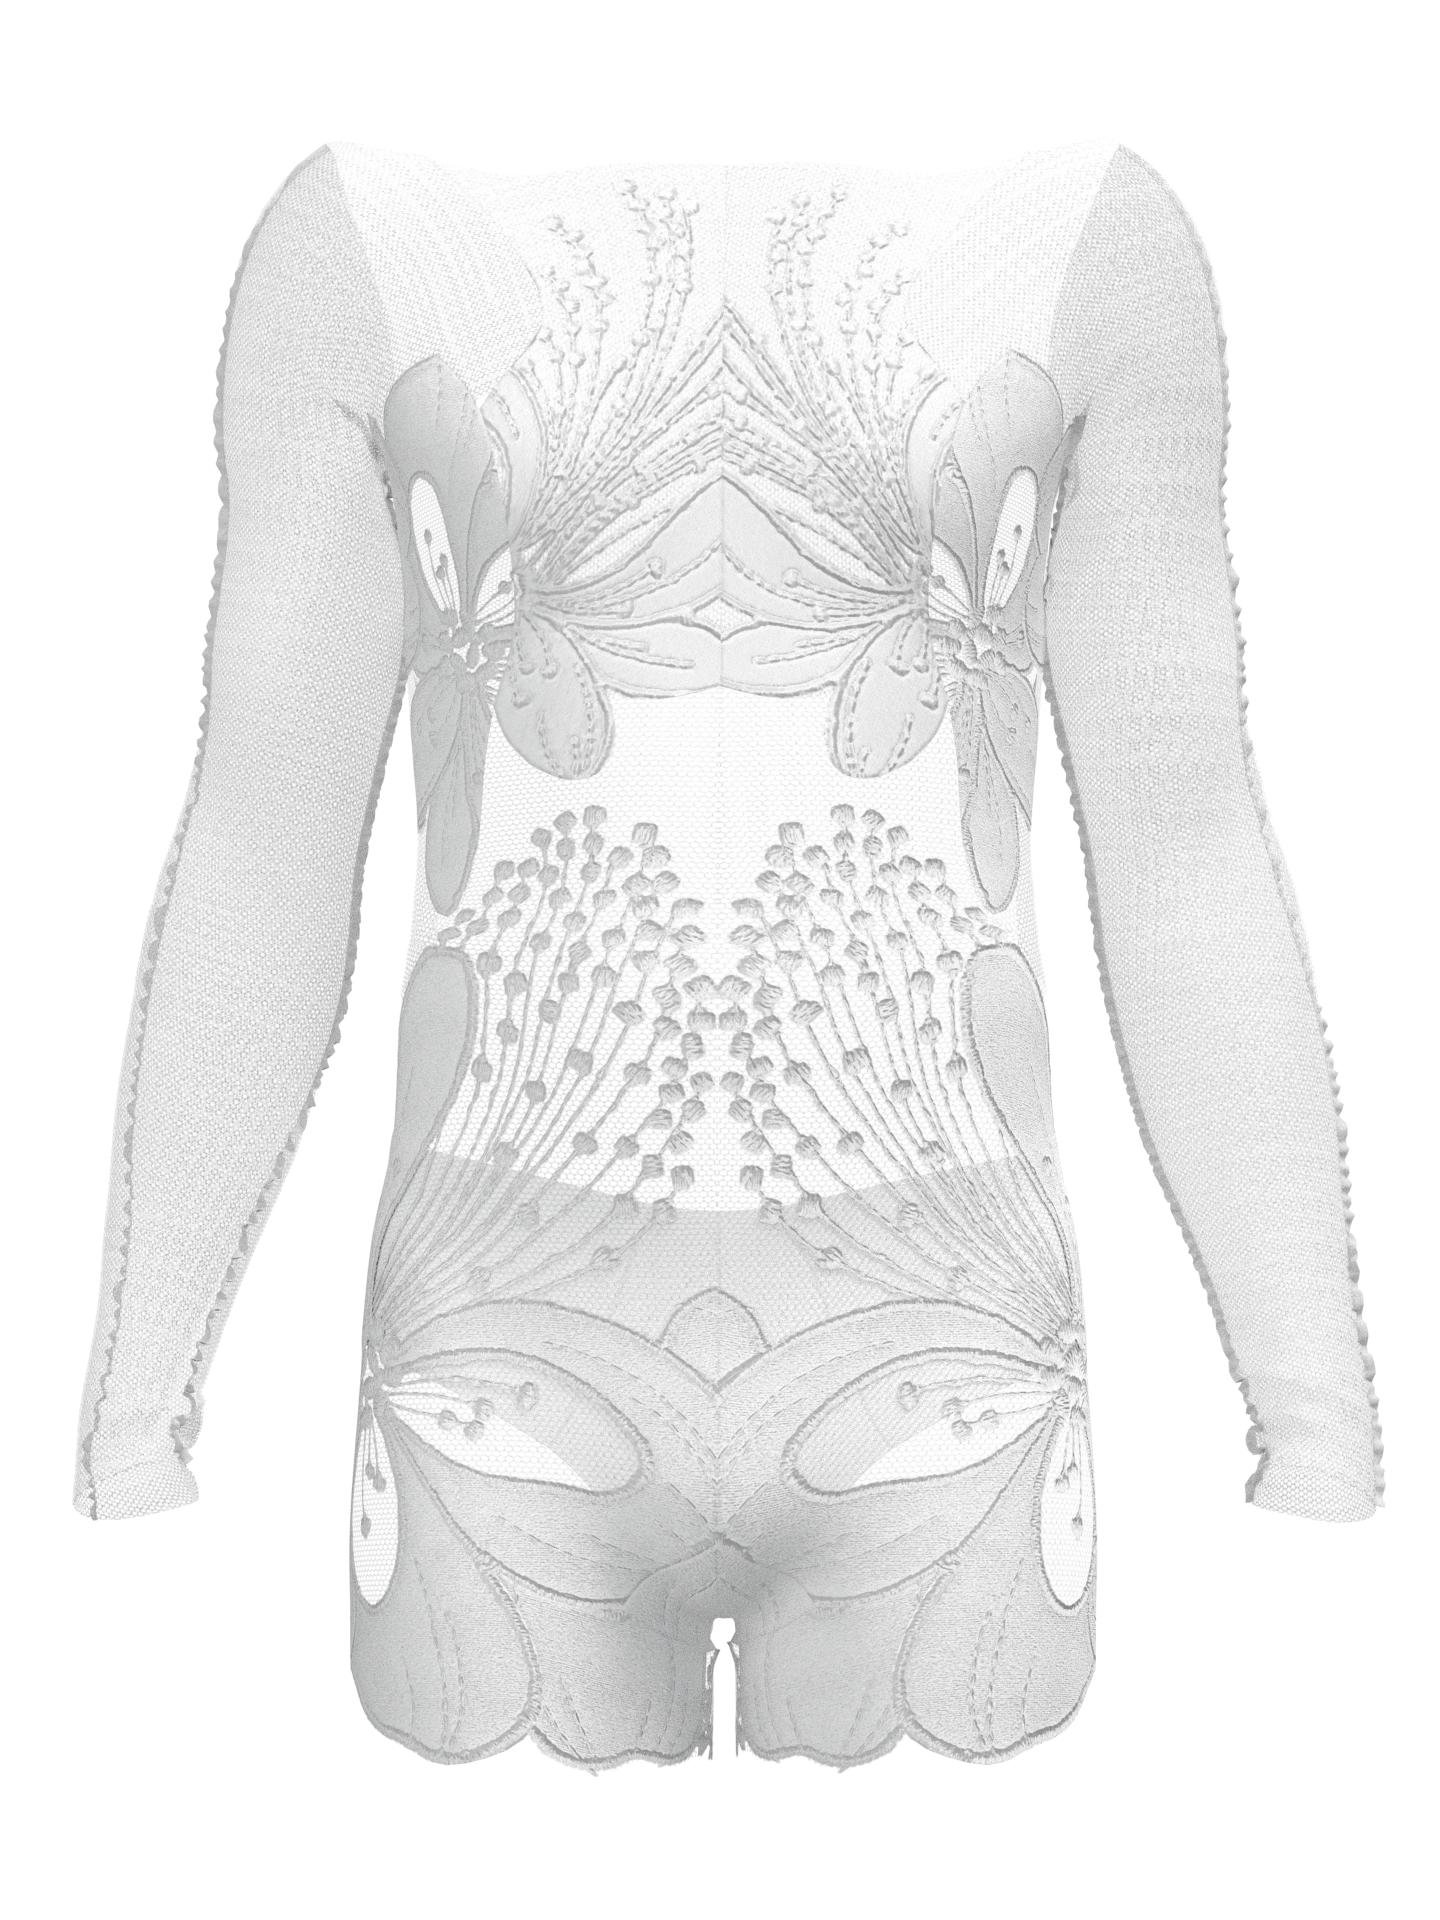 DiGi-BLOOM Bodysuit Male White by HYPERCURVE